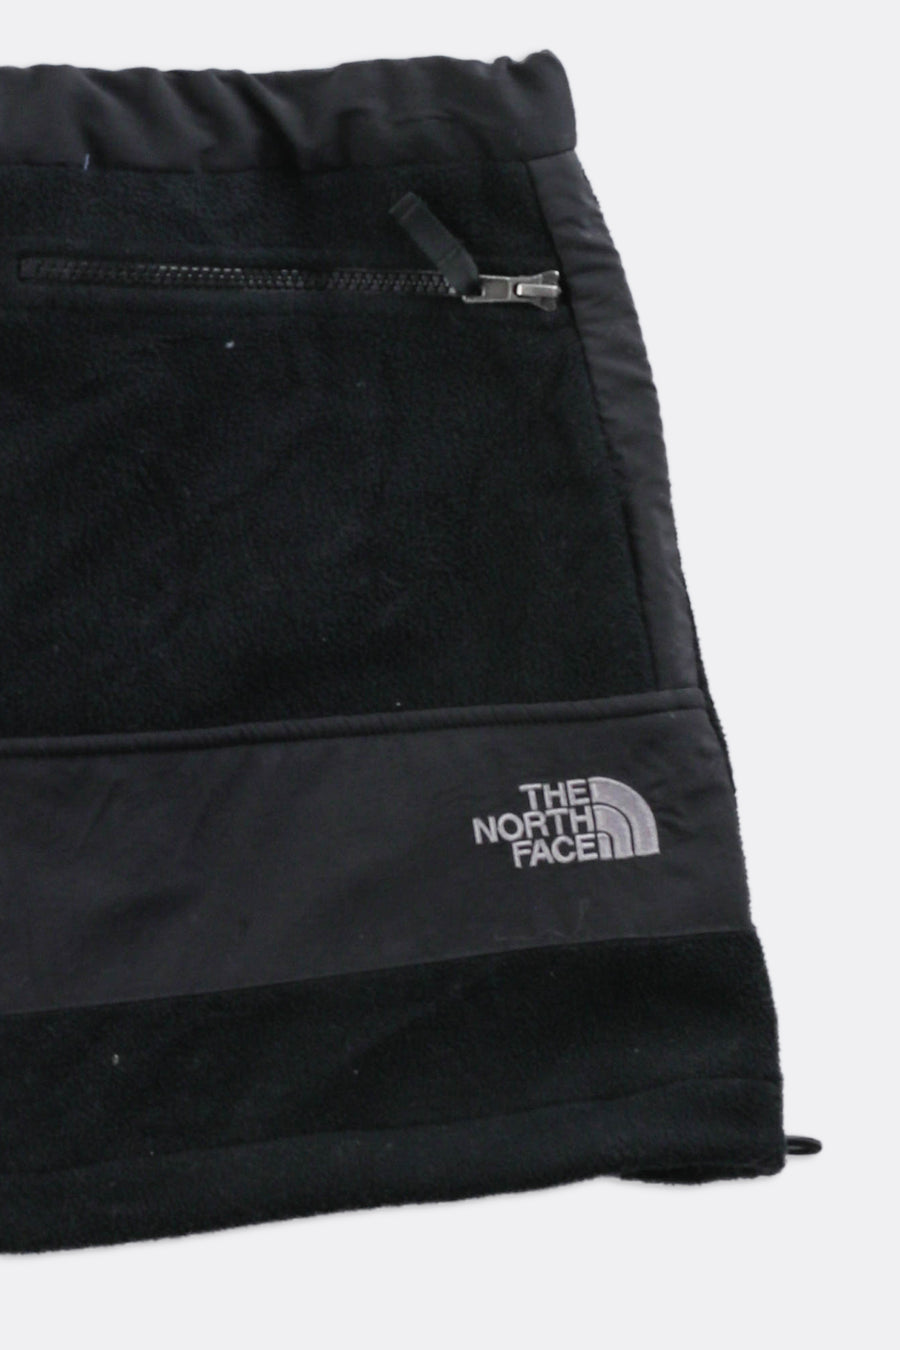 Rework North Face Fleece Mini Skirt - XS, S, L